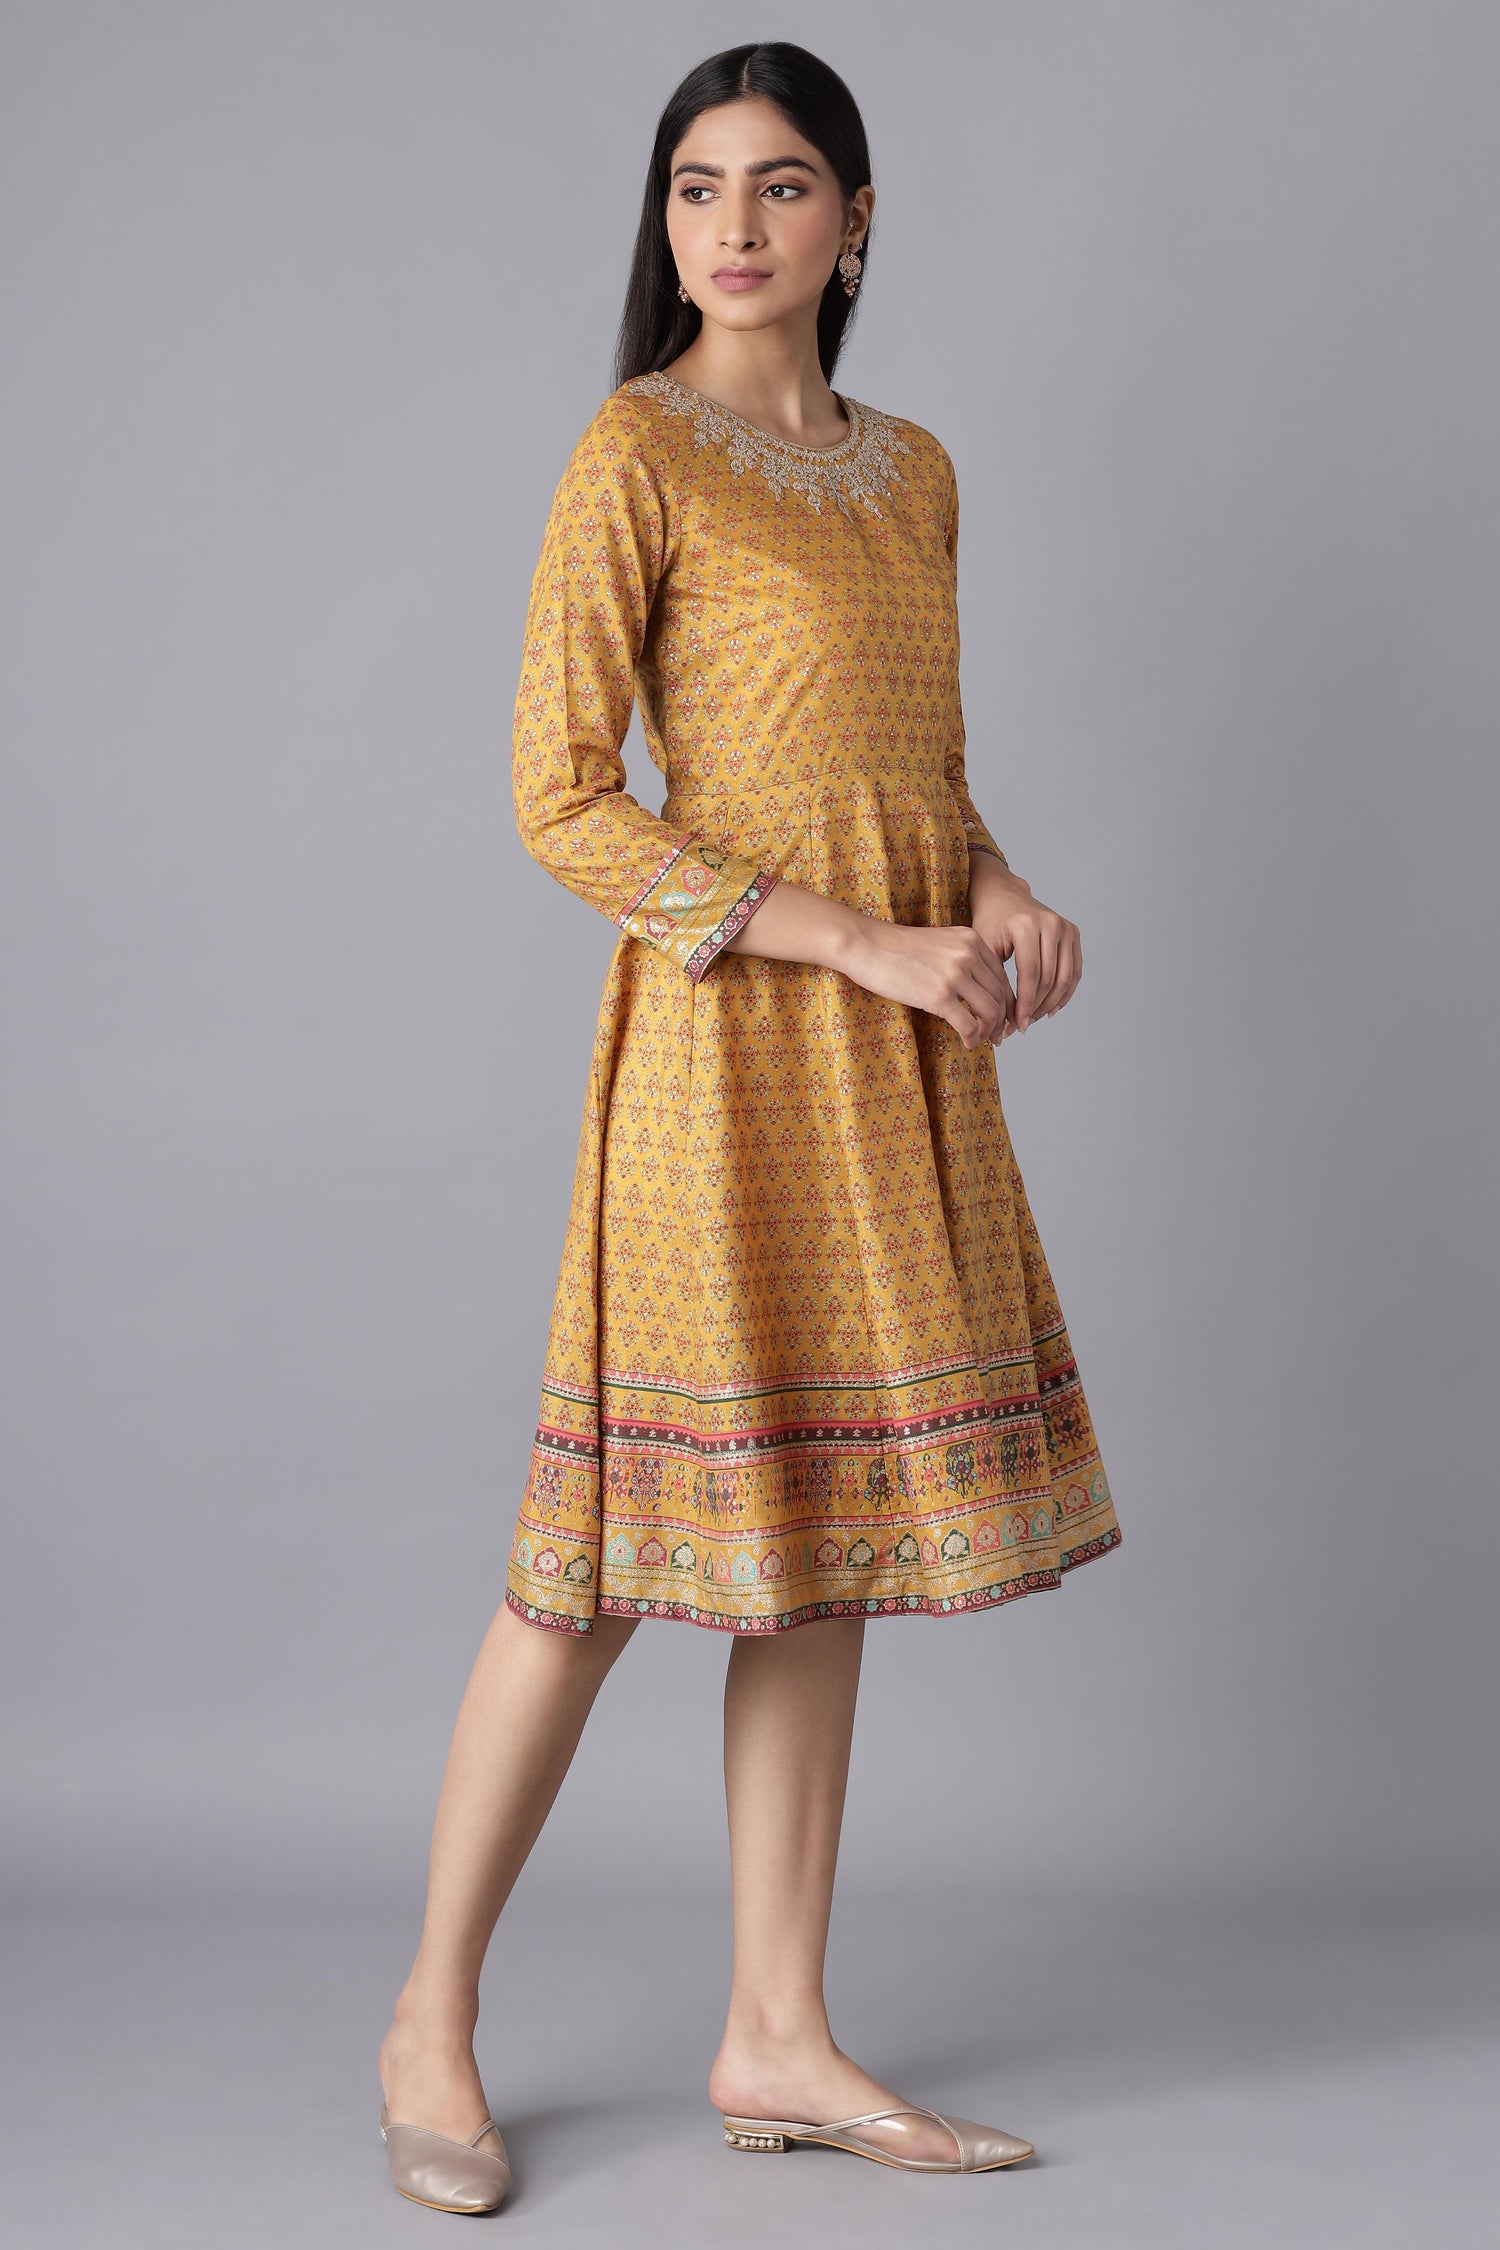 Chrome Yellow Printed kurta with Embroidery - wforwoman